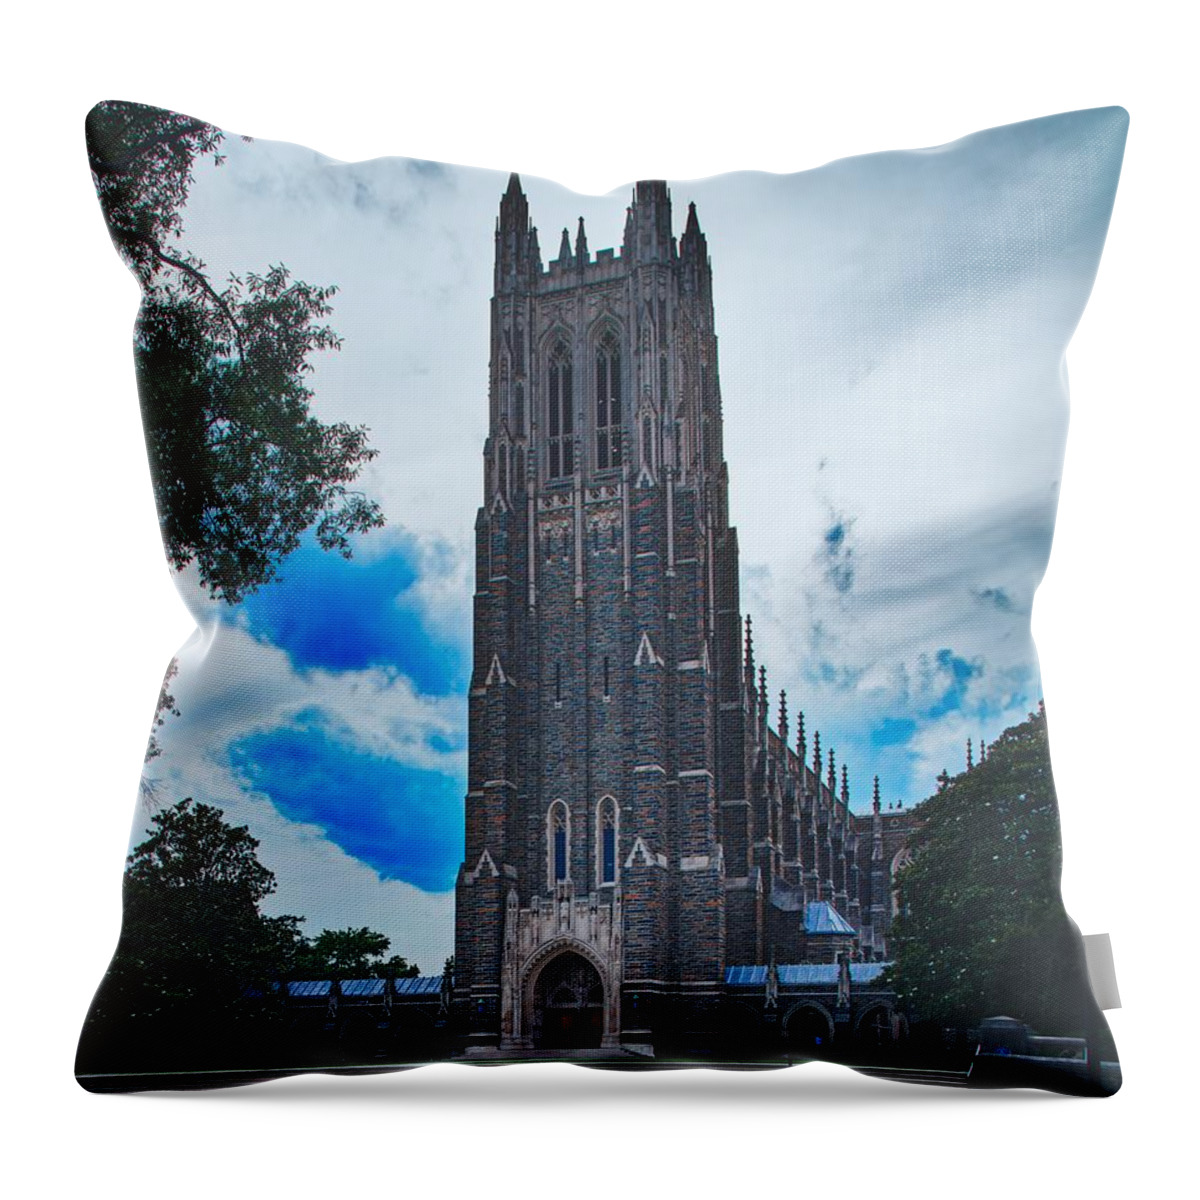 Duke University Throw Pillow featuring the photograph Duke University Chapel At Dusk #1 by Mountain Dreams